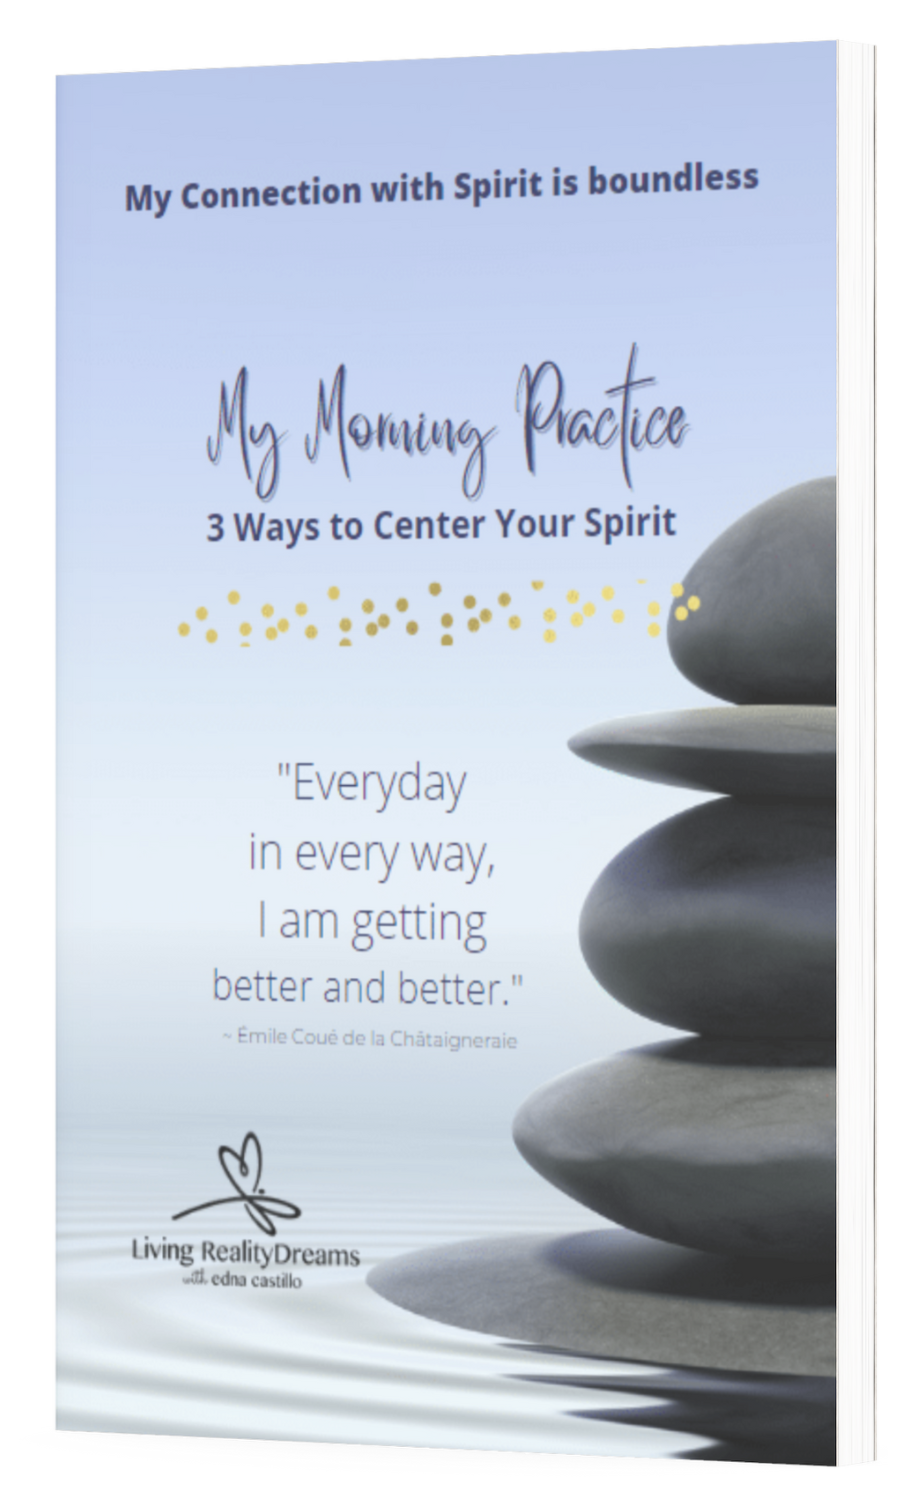 My Morning Practice: 3 Ways to Center Your Spirit